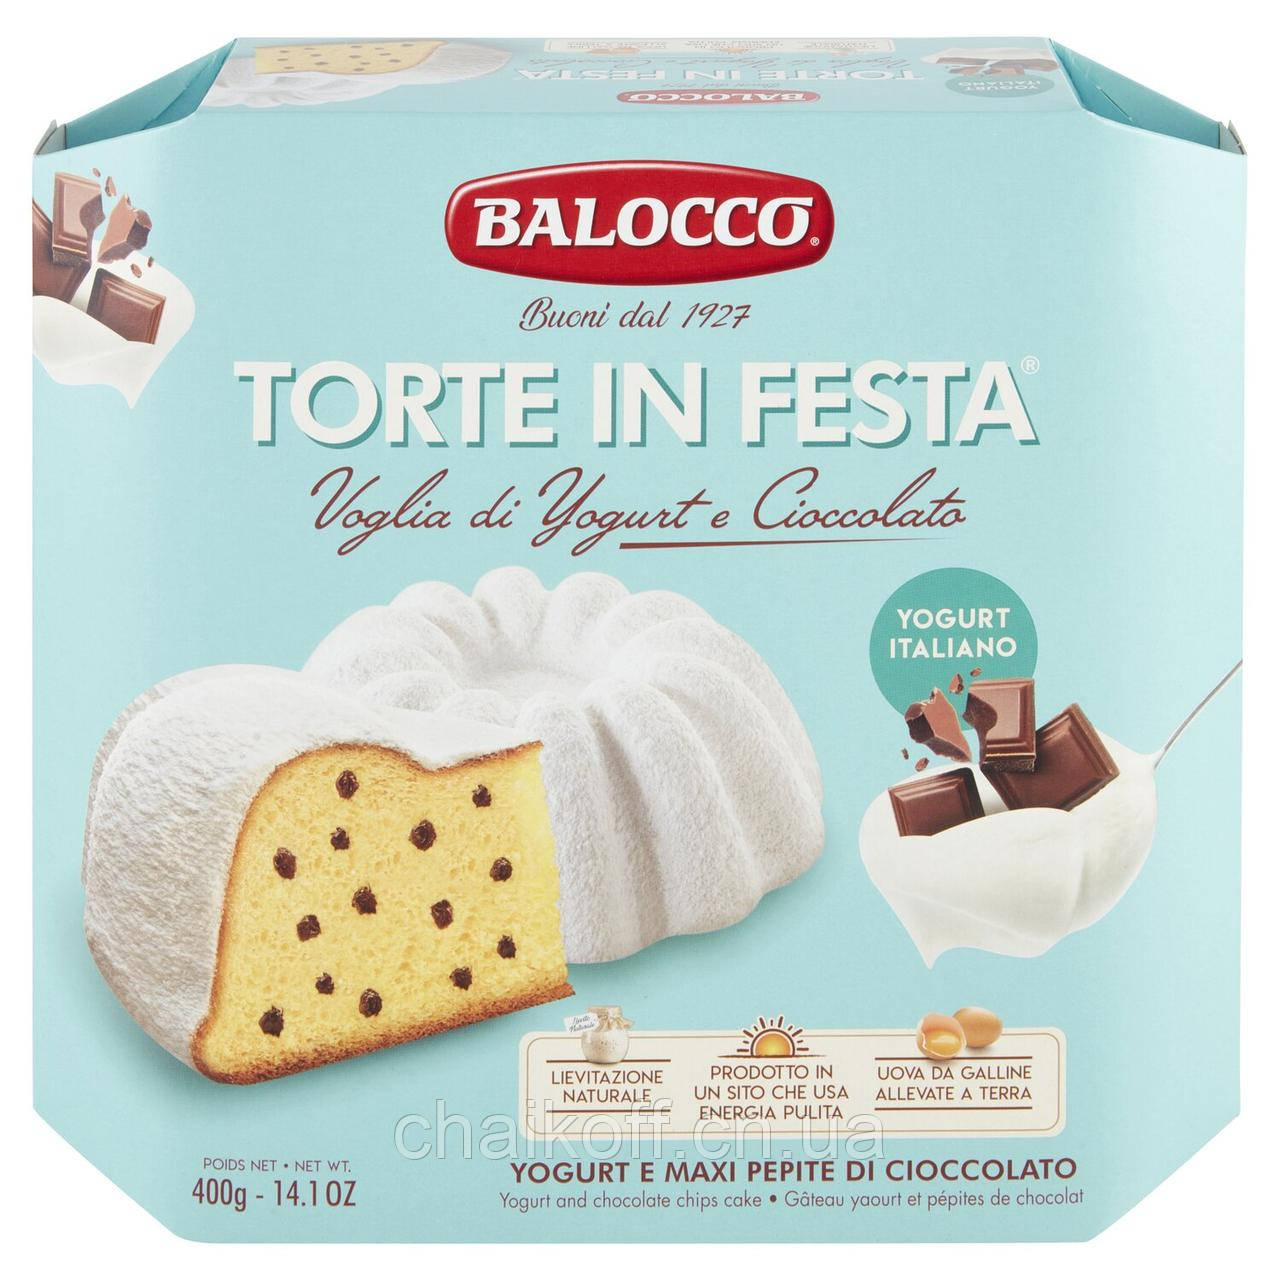 Різдвяний Кекс Balocco Torte in Festa Voglia di Yogurt e Cioccolato 400 г (Італія), фото 1